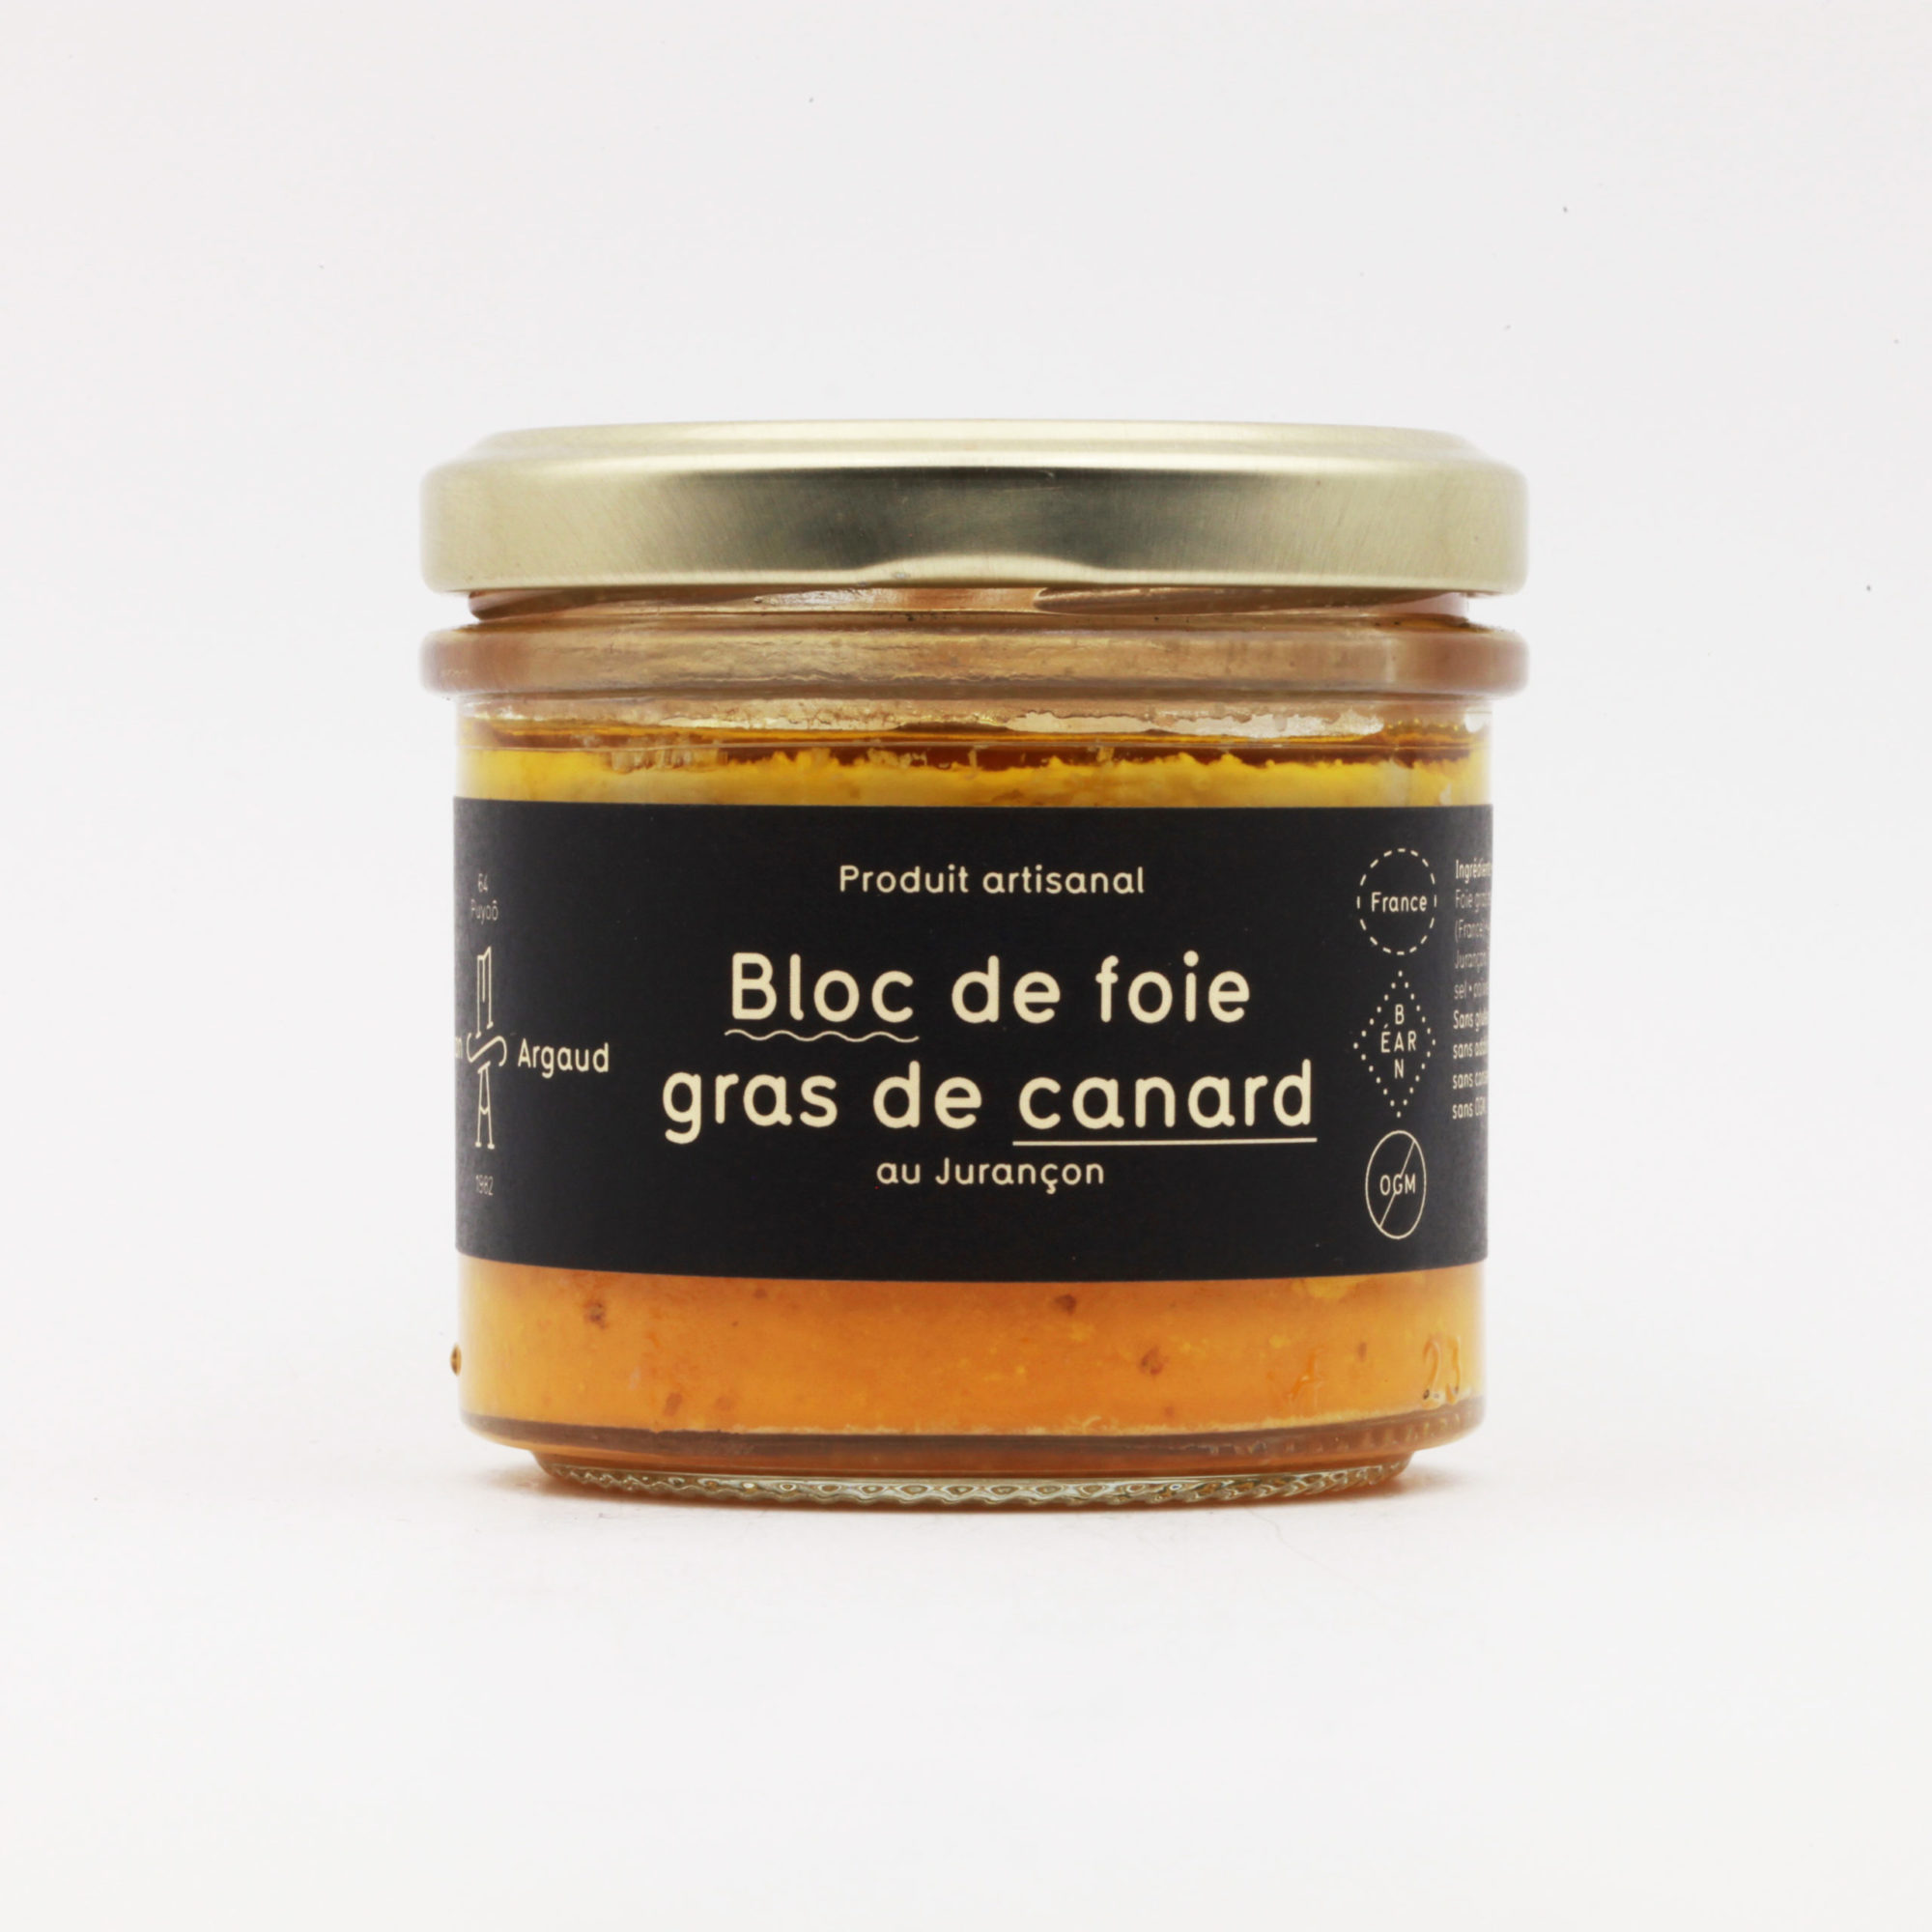 Bloc de foie gras de canard au Jurançon